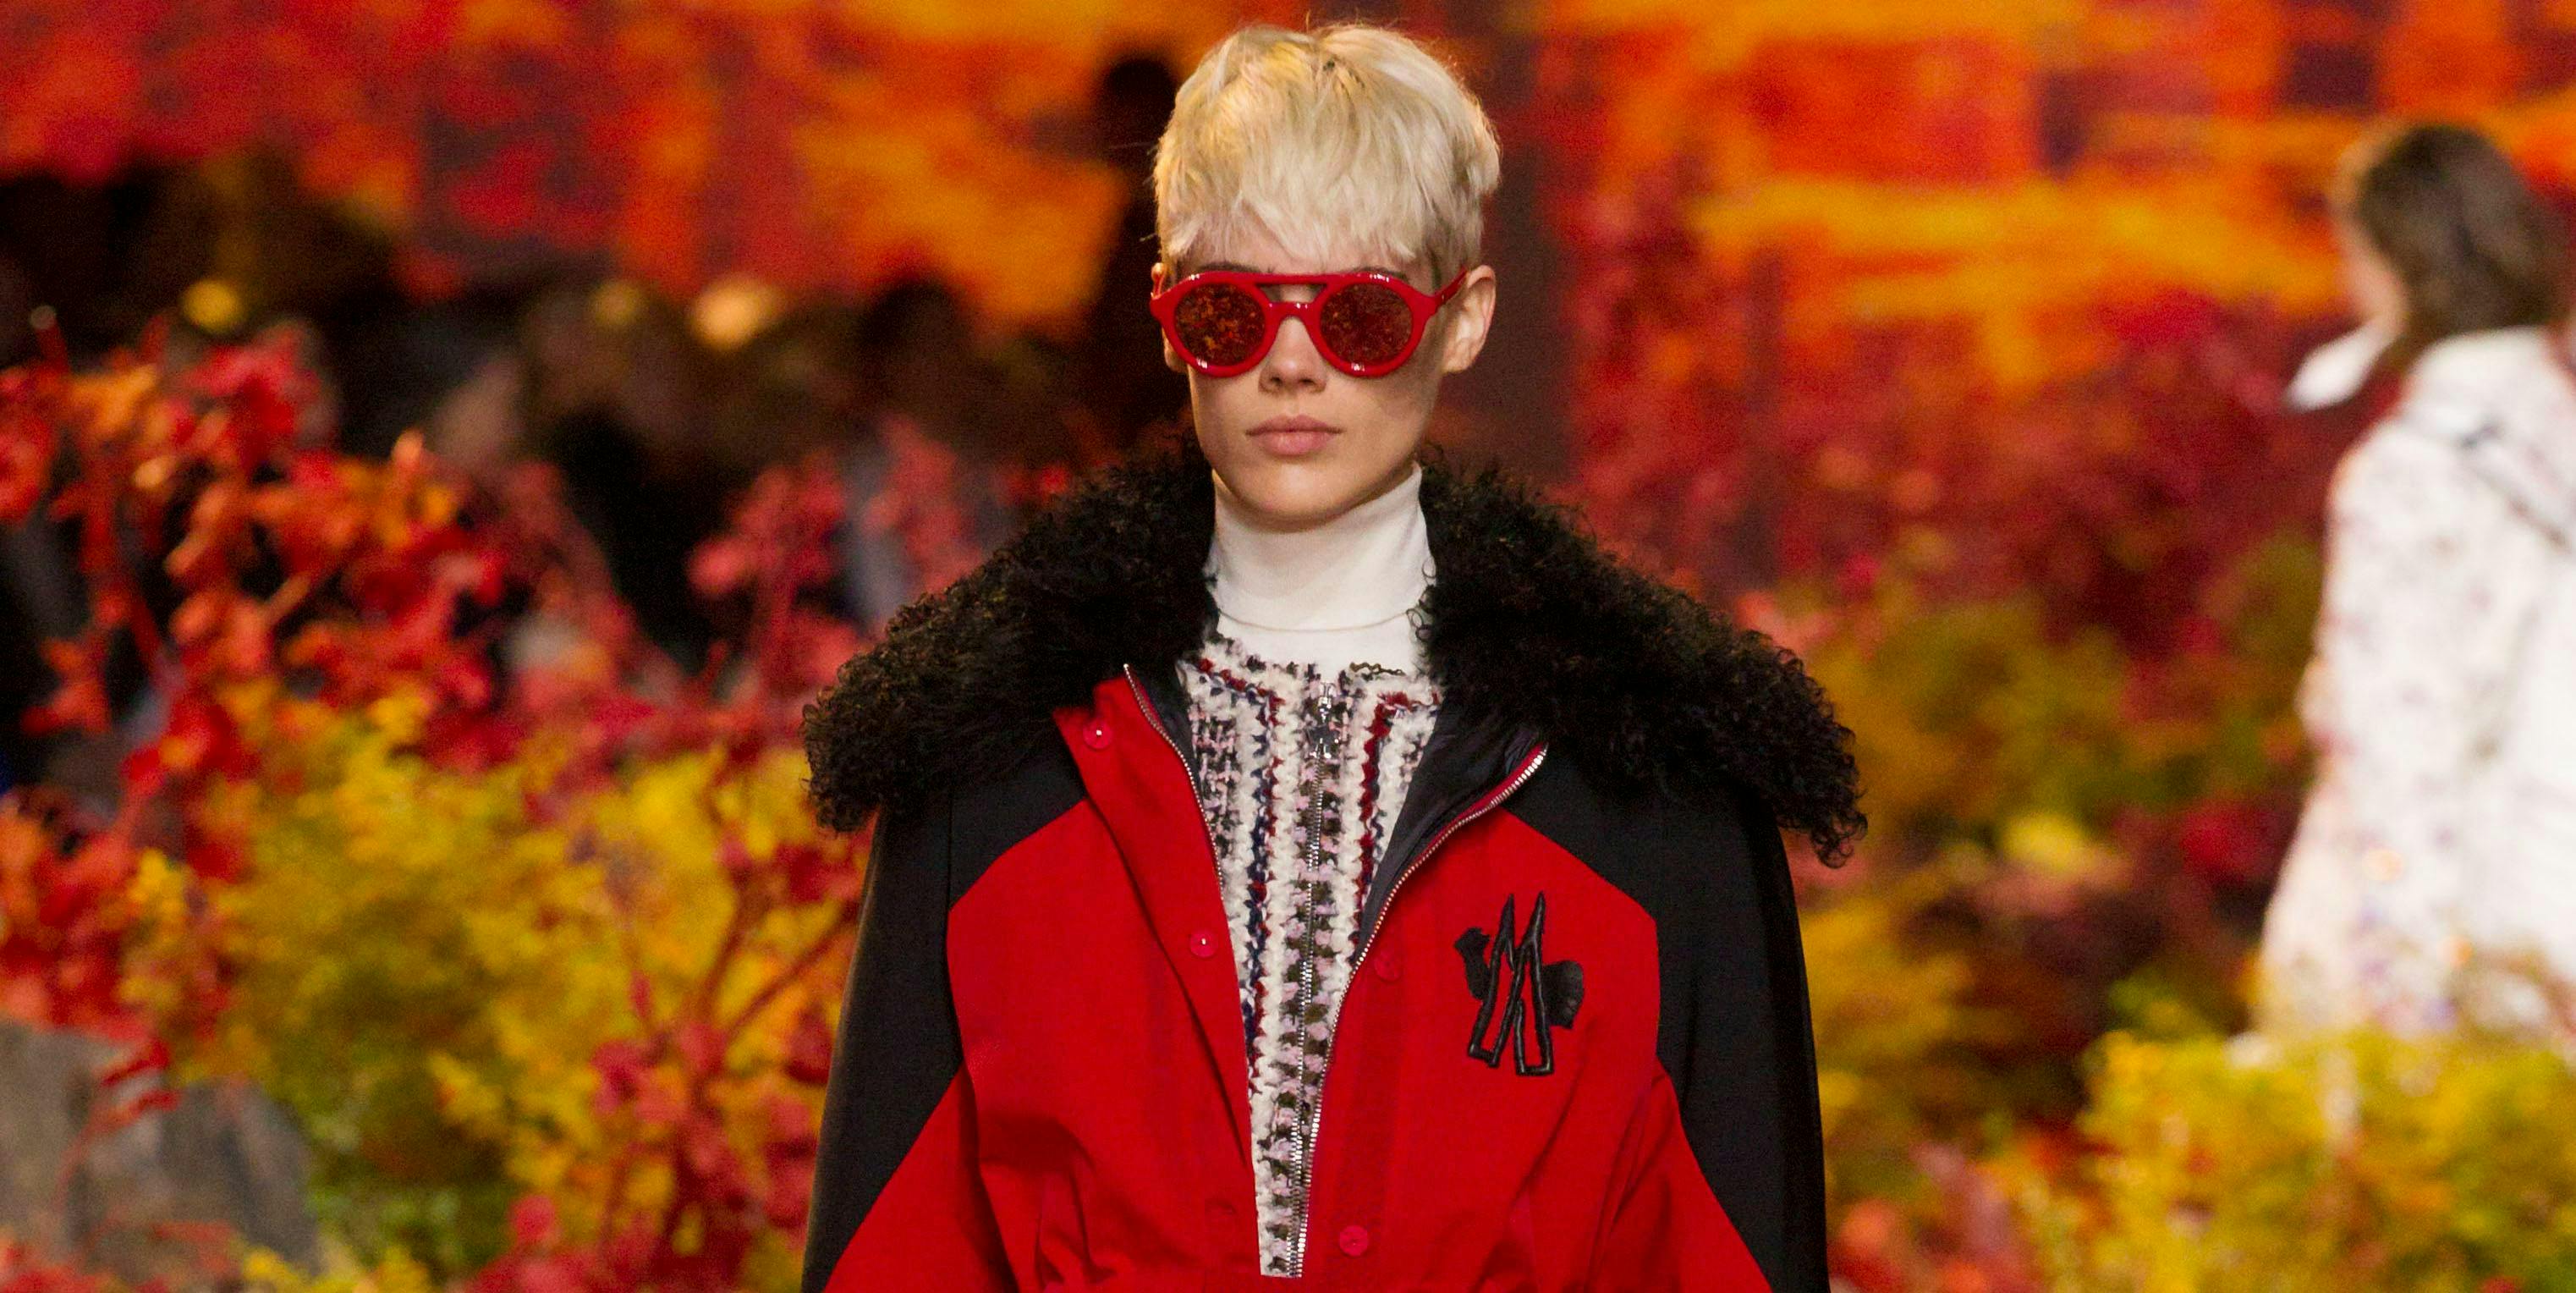 clothing apparel sunglasses accessories accessory person human coat